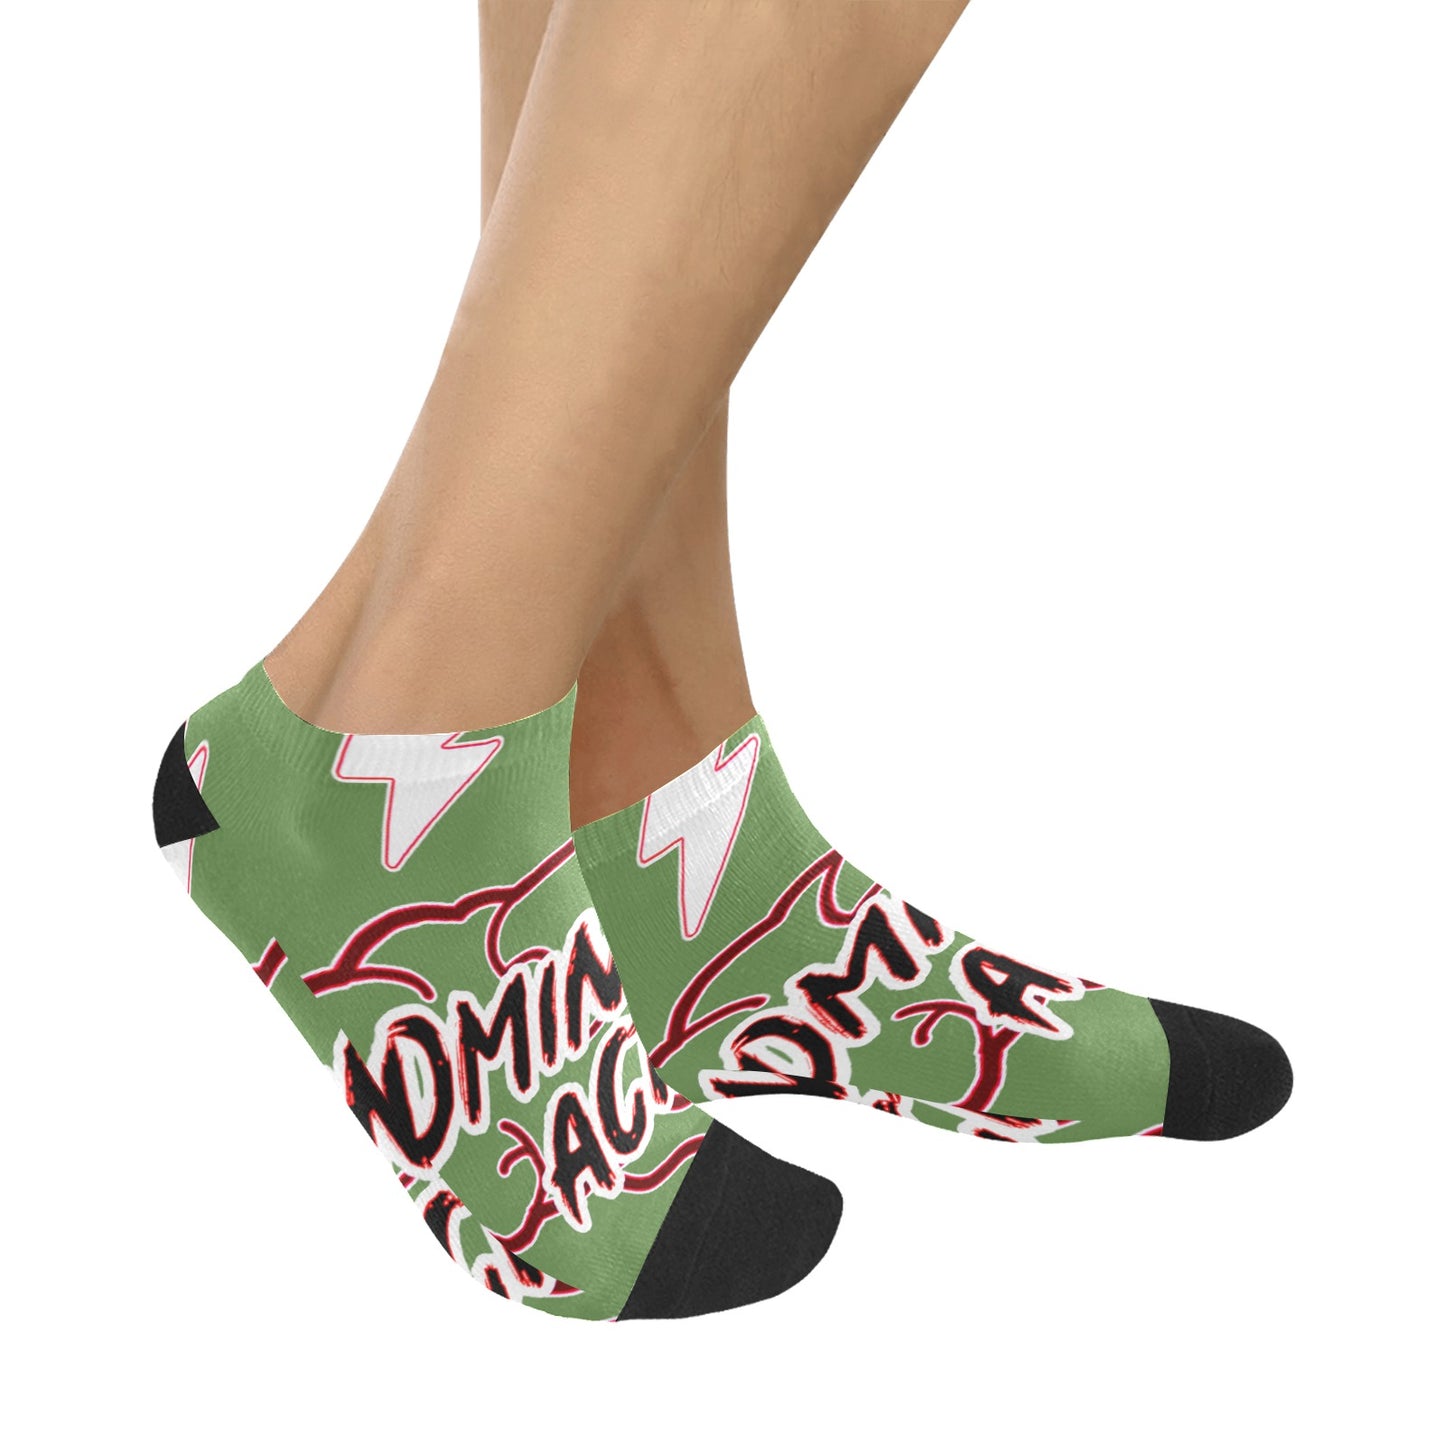 fz men's mind ankle socks one size / fz mind socks - green men's ankle socks